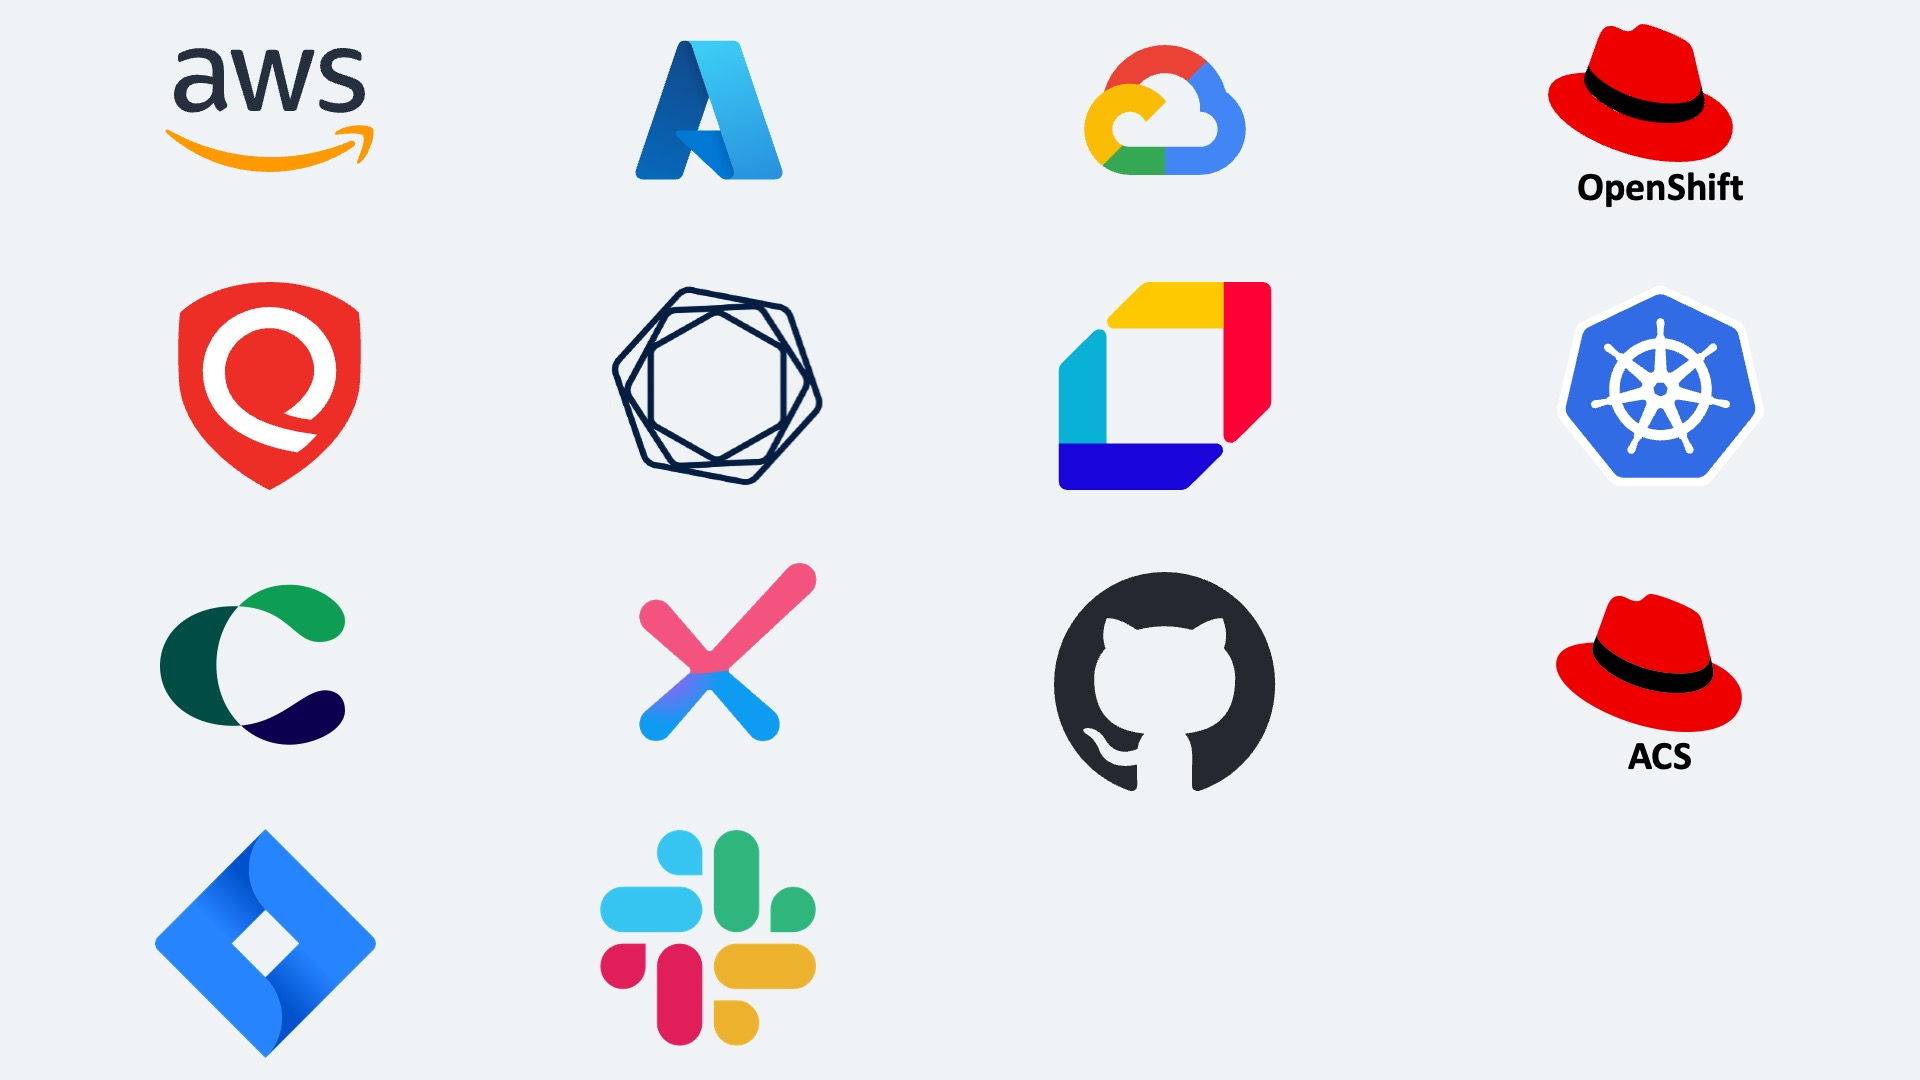 Logos for AWS, Azure, GCP, Red Hat OpenShift ACS, Qualys, Aqua, Tenable, Kubernetes, GitHub, Jira, Slack, Contrast, Checkmarx